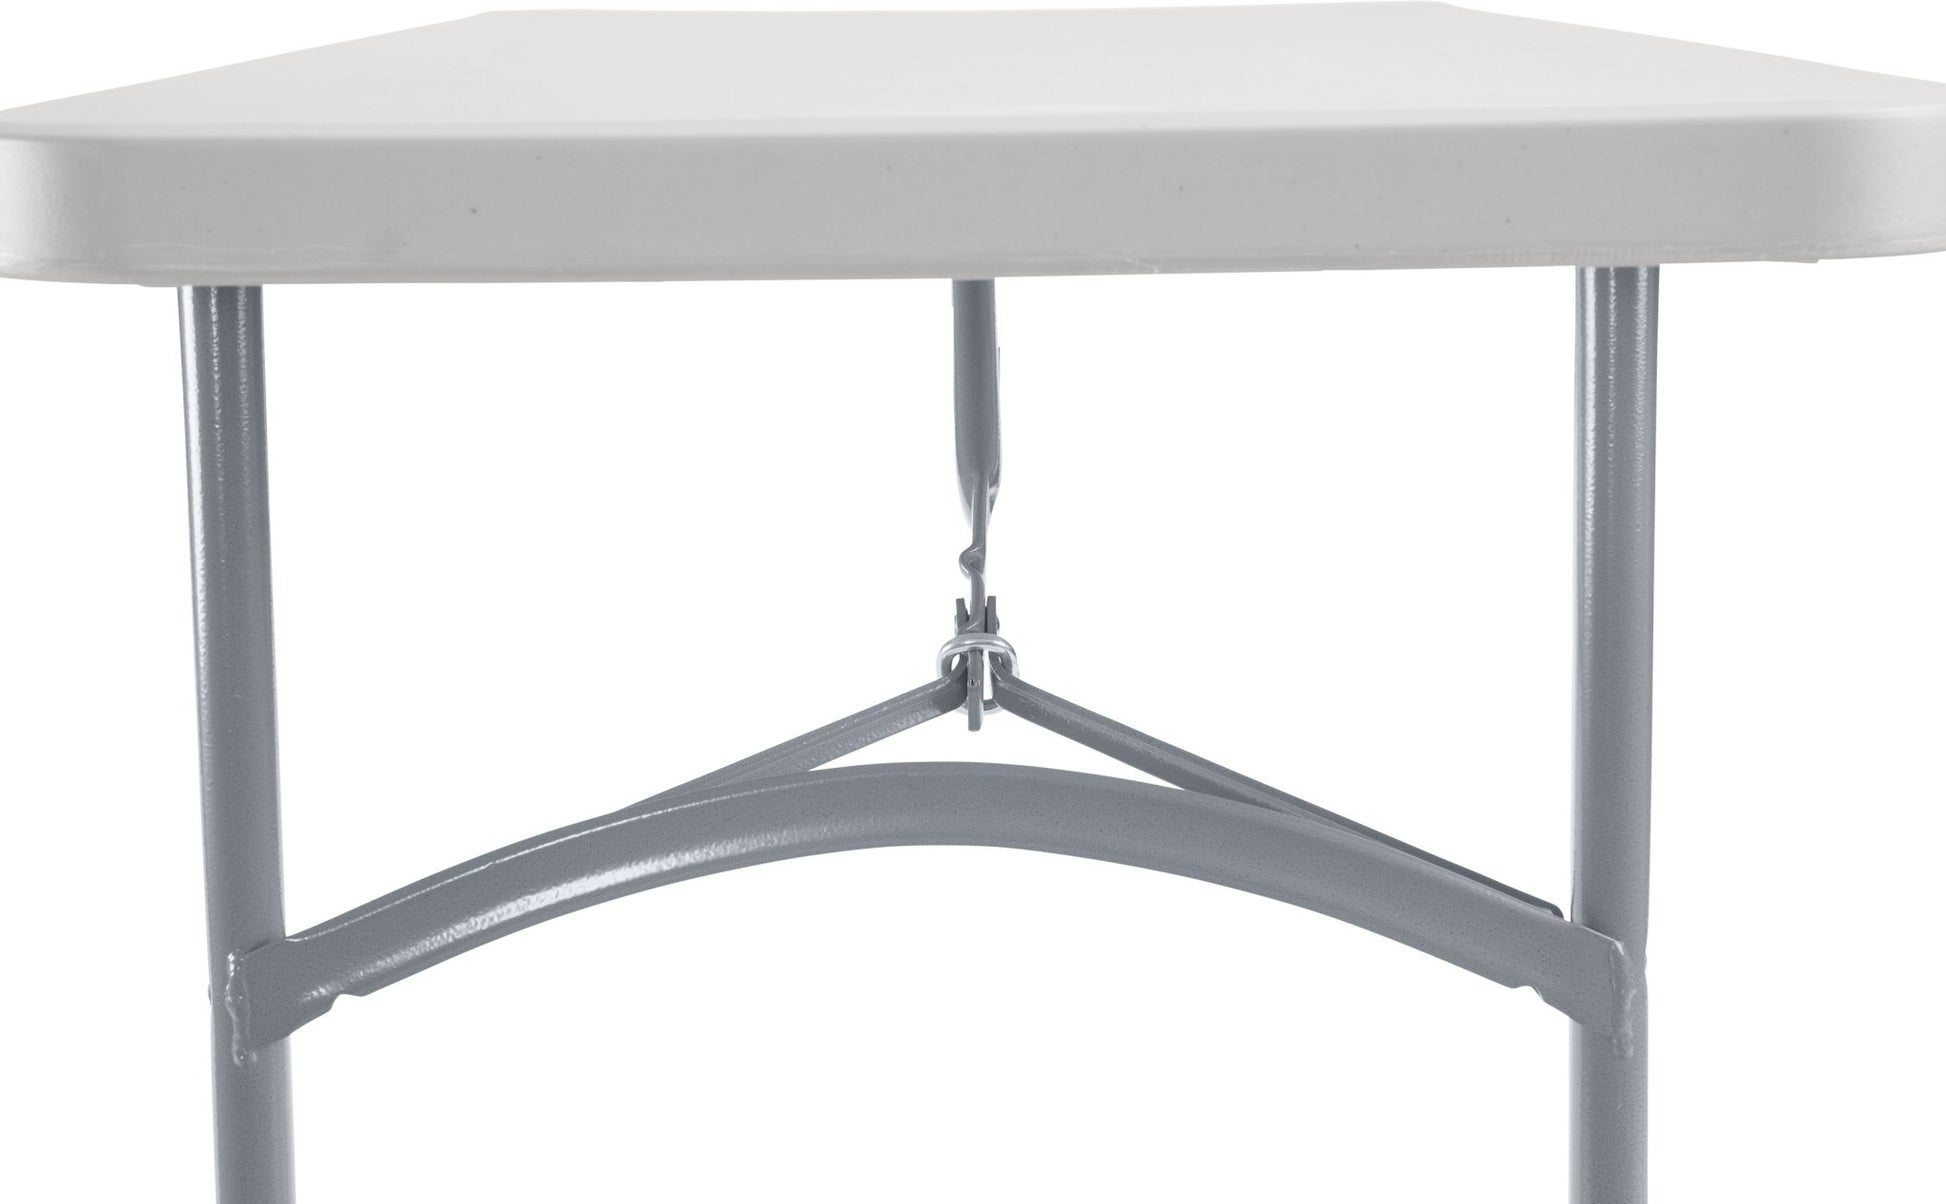 NPS 24" x 48" Heavy Duty Folding Table, Speckled Gray (National Public Seating NPS-BT2448) - SchoolOutlet